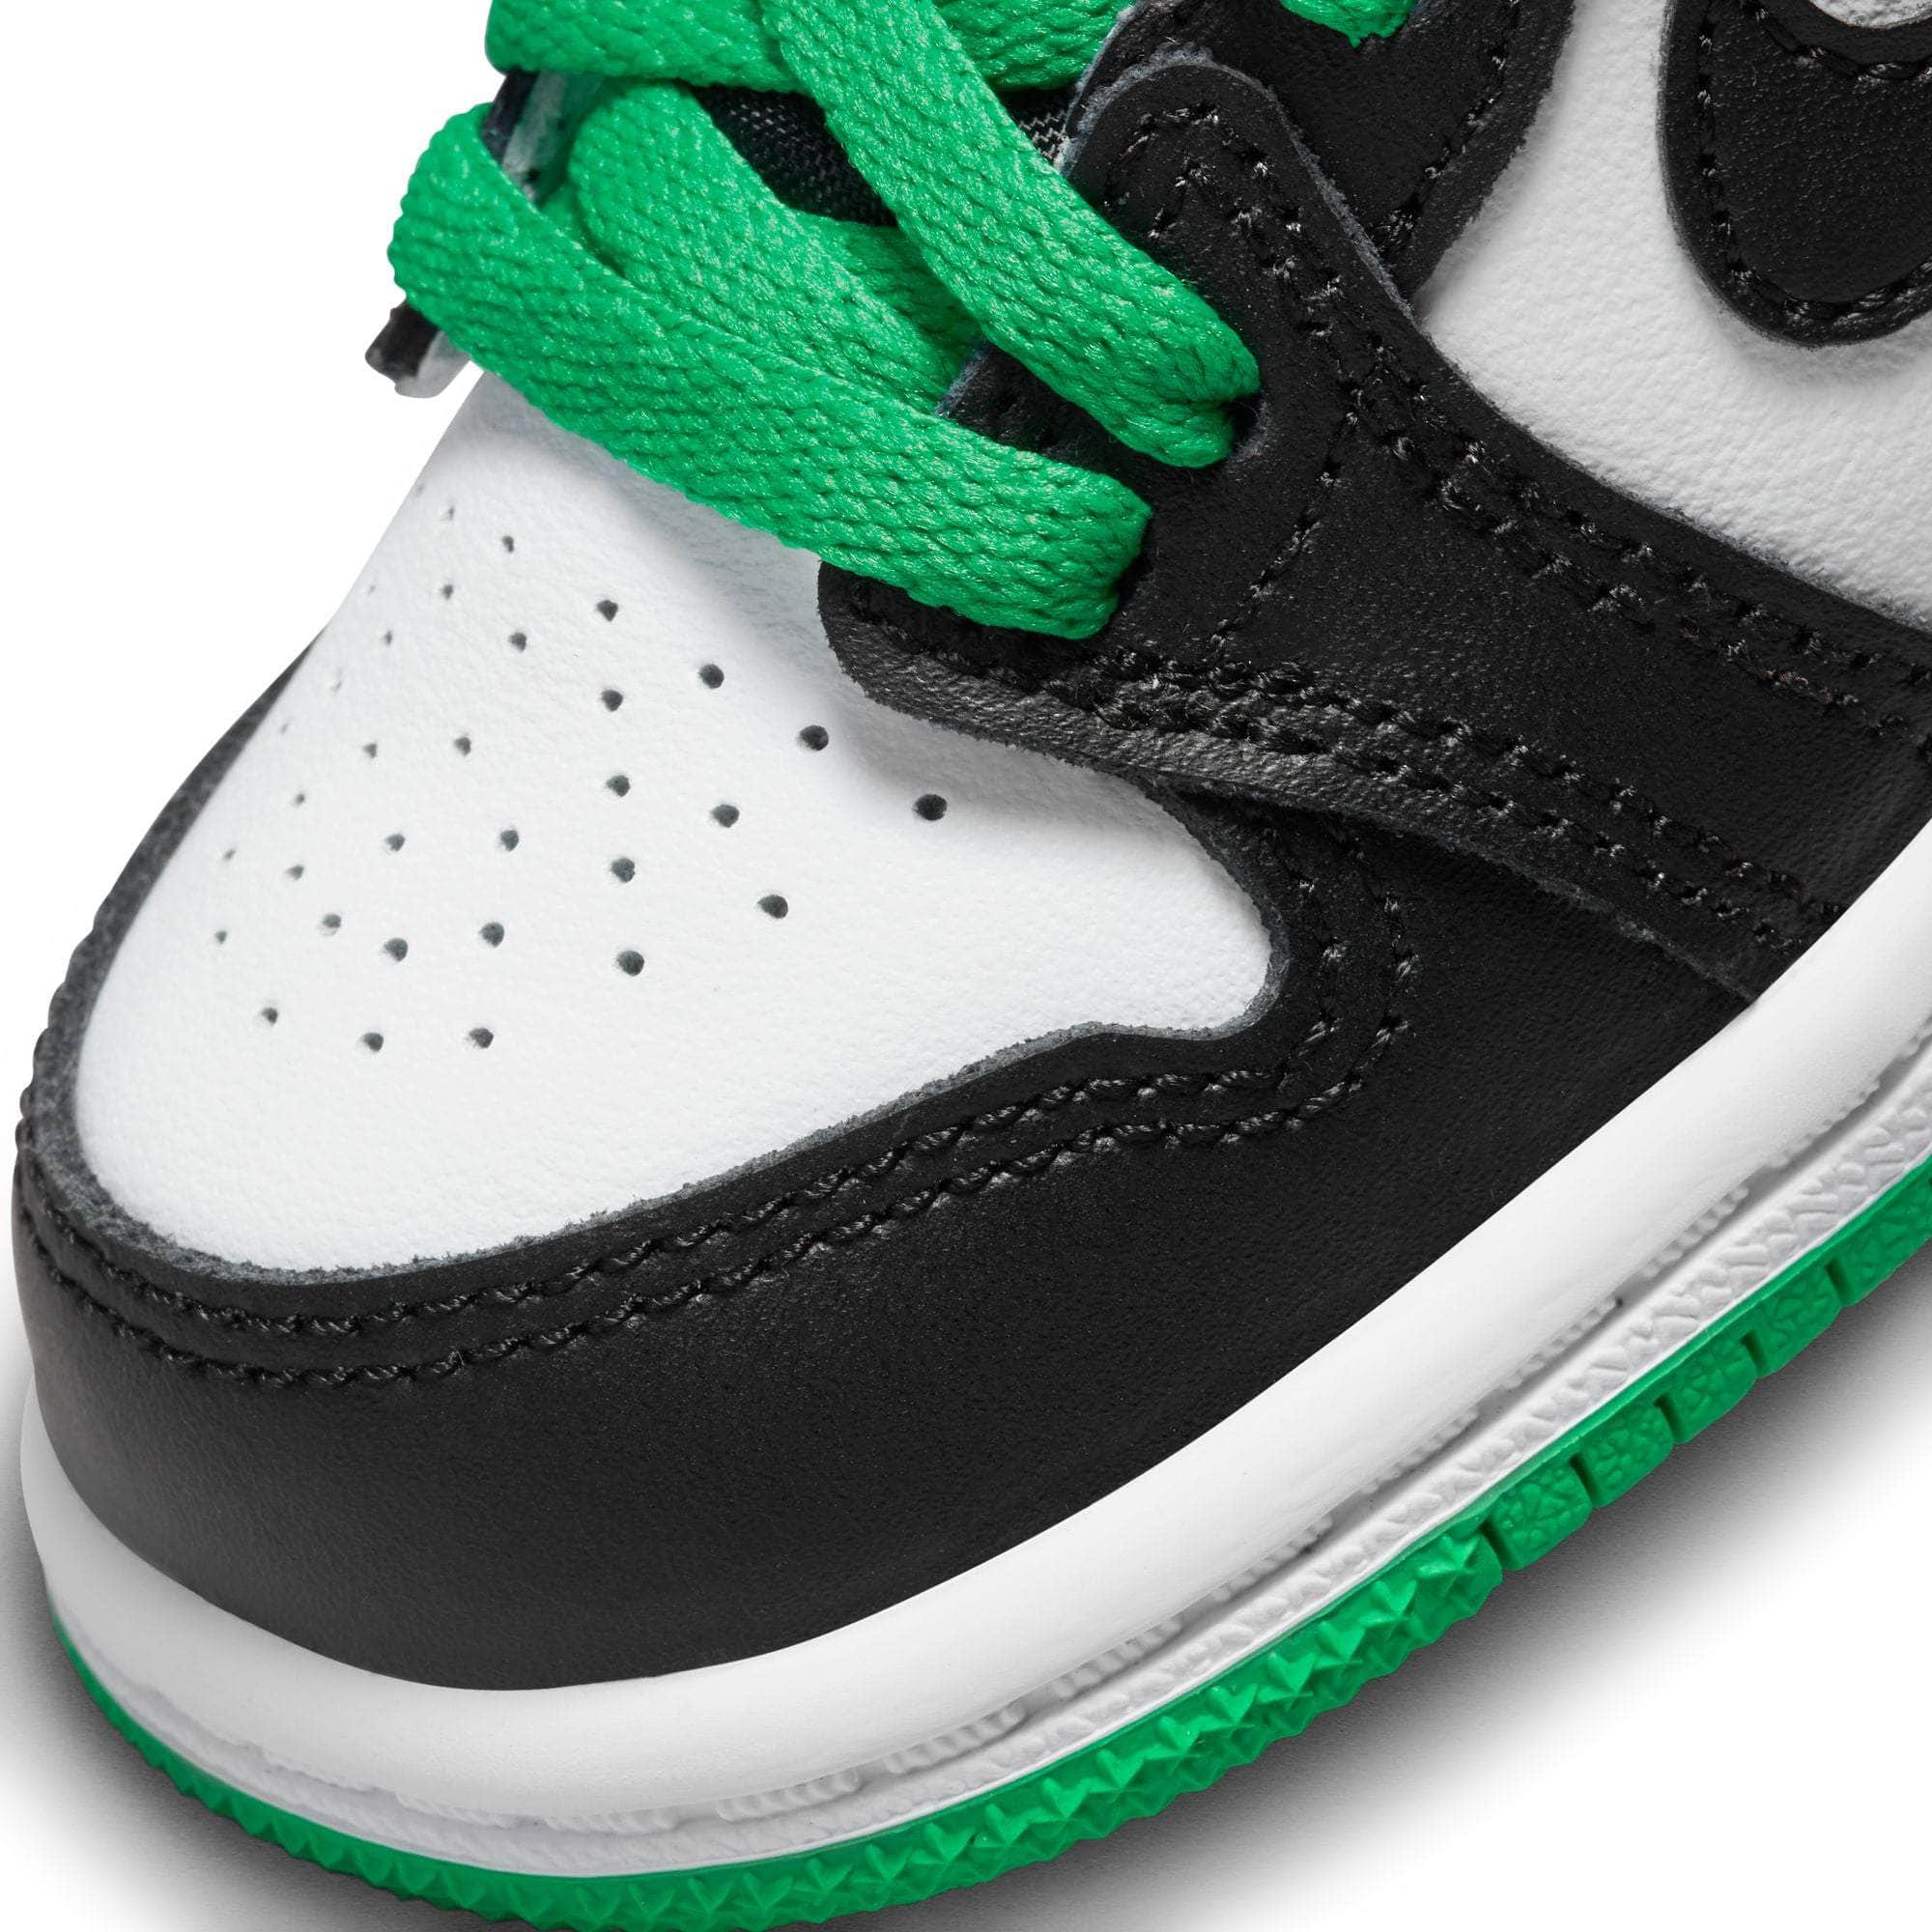 Air Jordan FOOTWEAR Air Jordan 1 Retro High OG “Lucky Green” - Toddler's